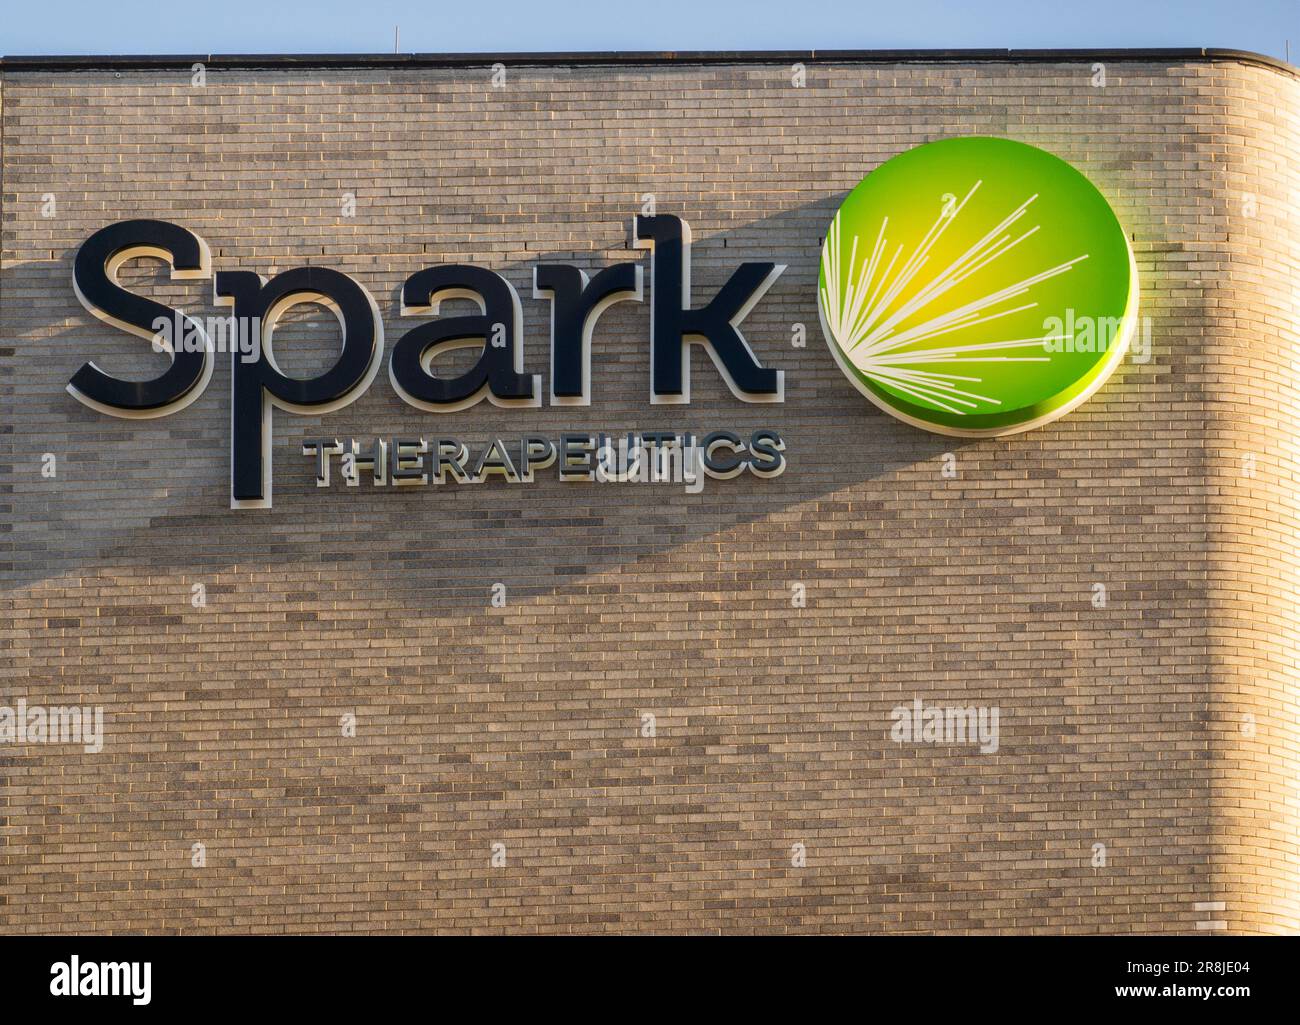 Spark therapeutics Gene Therapy Innovation center in Philadelphia PA Stock Photo